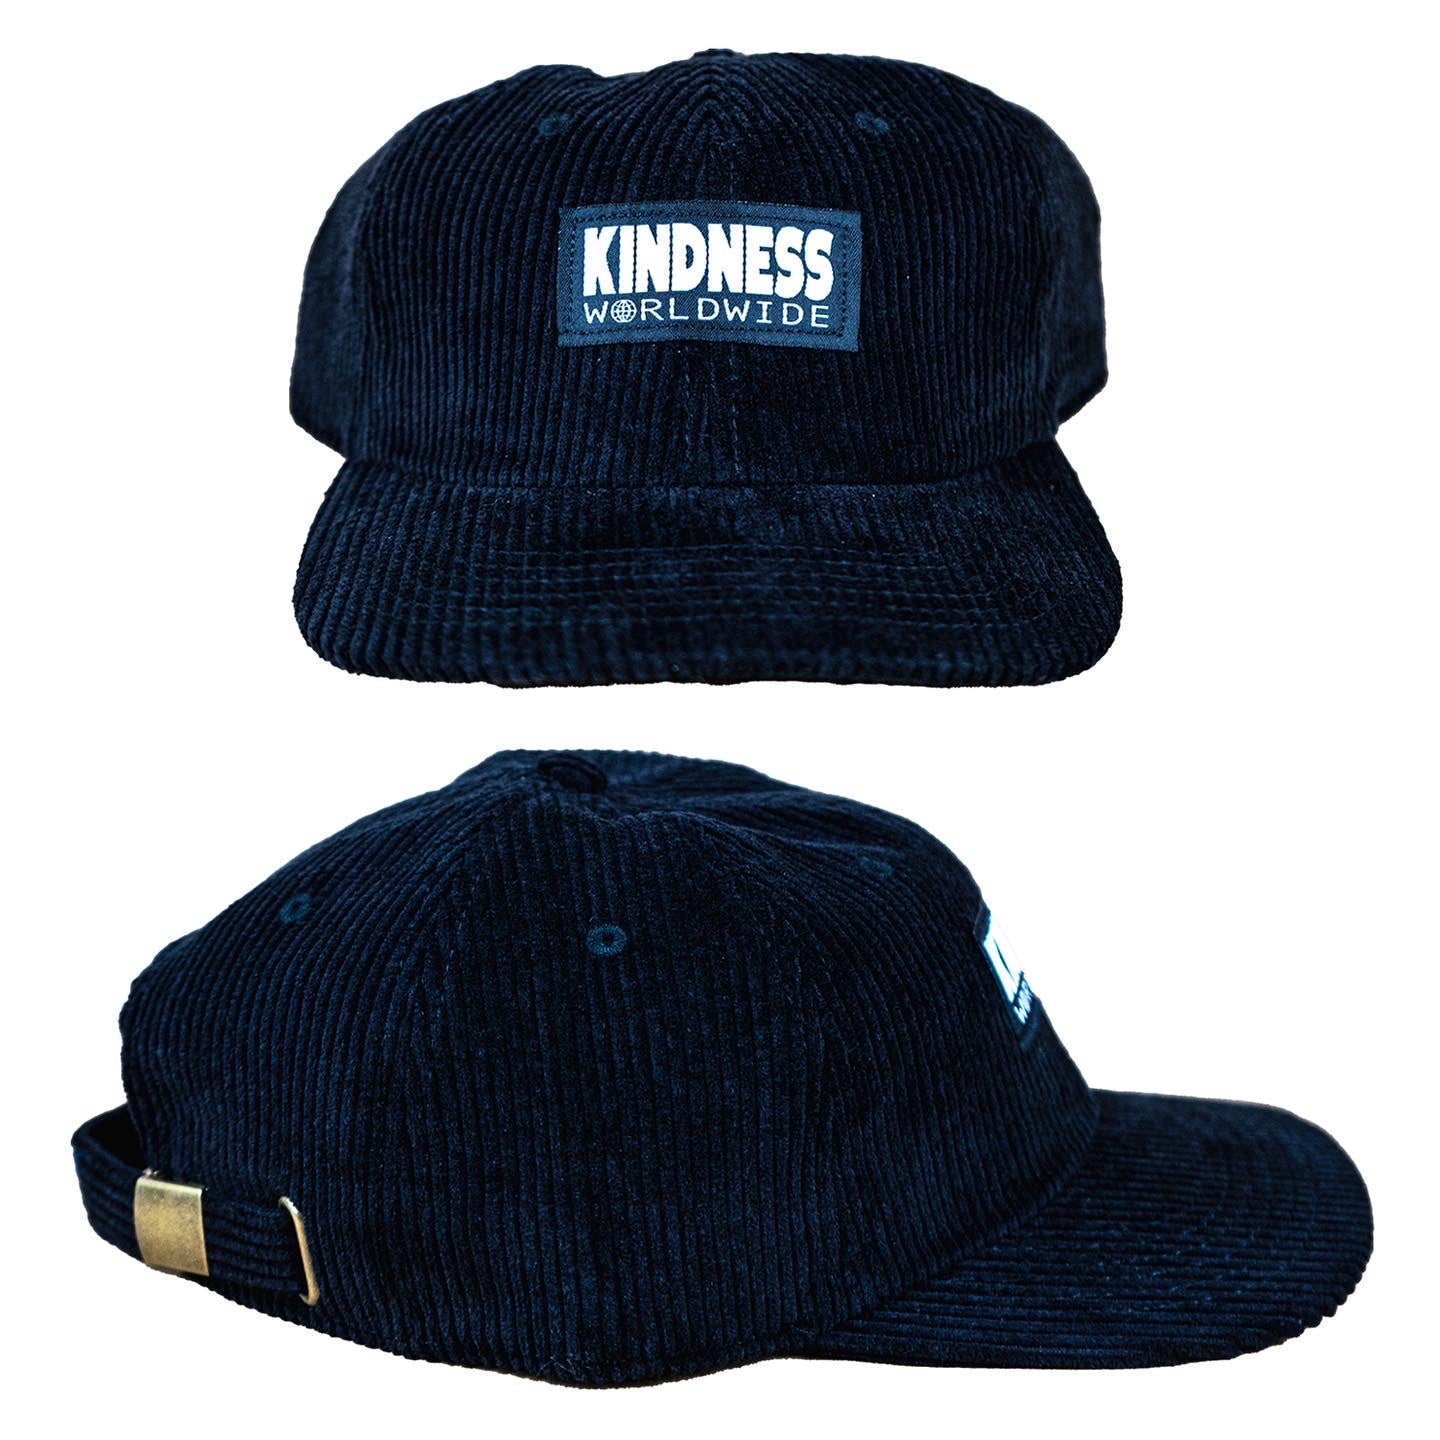 SALE - The Kindness Worldwide Corduroy Hat